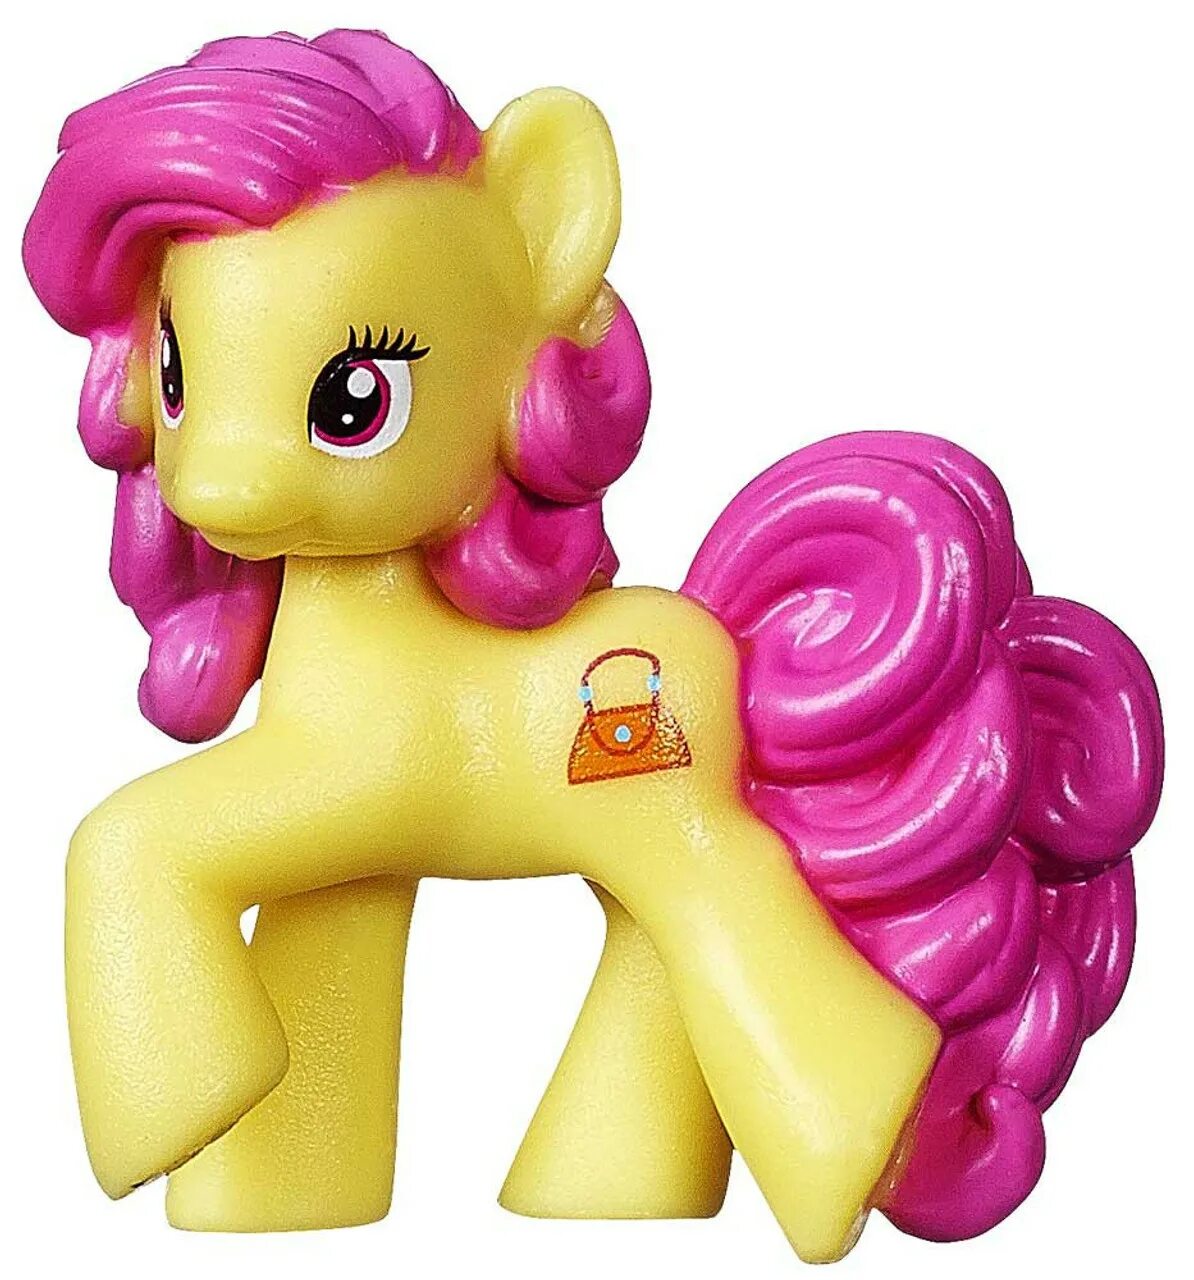 Mini pony. Pursey Pink пони. My little Pony Pursey Pink. My little Pony Blind Bag набор. MLP Wave 11 Blind Bag.